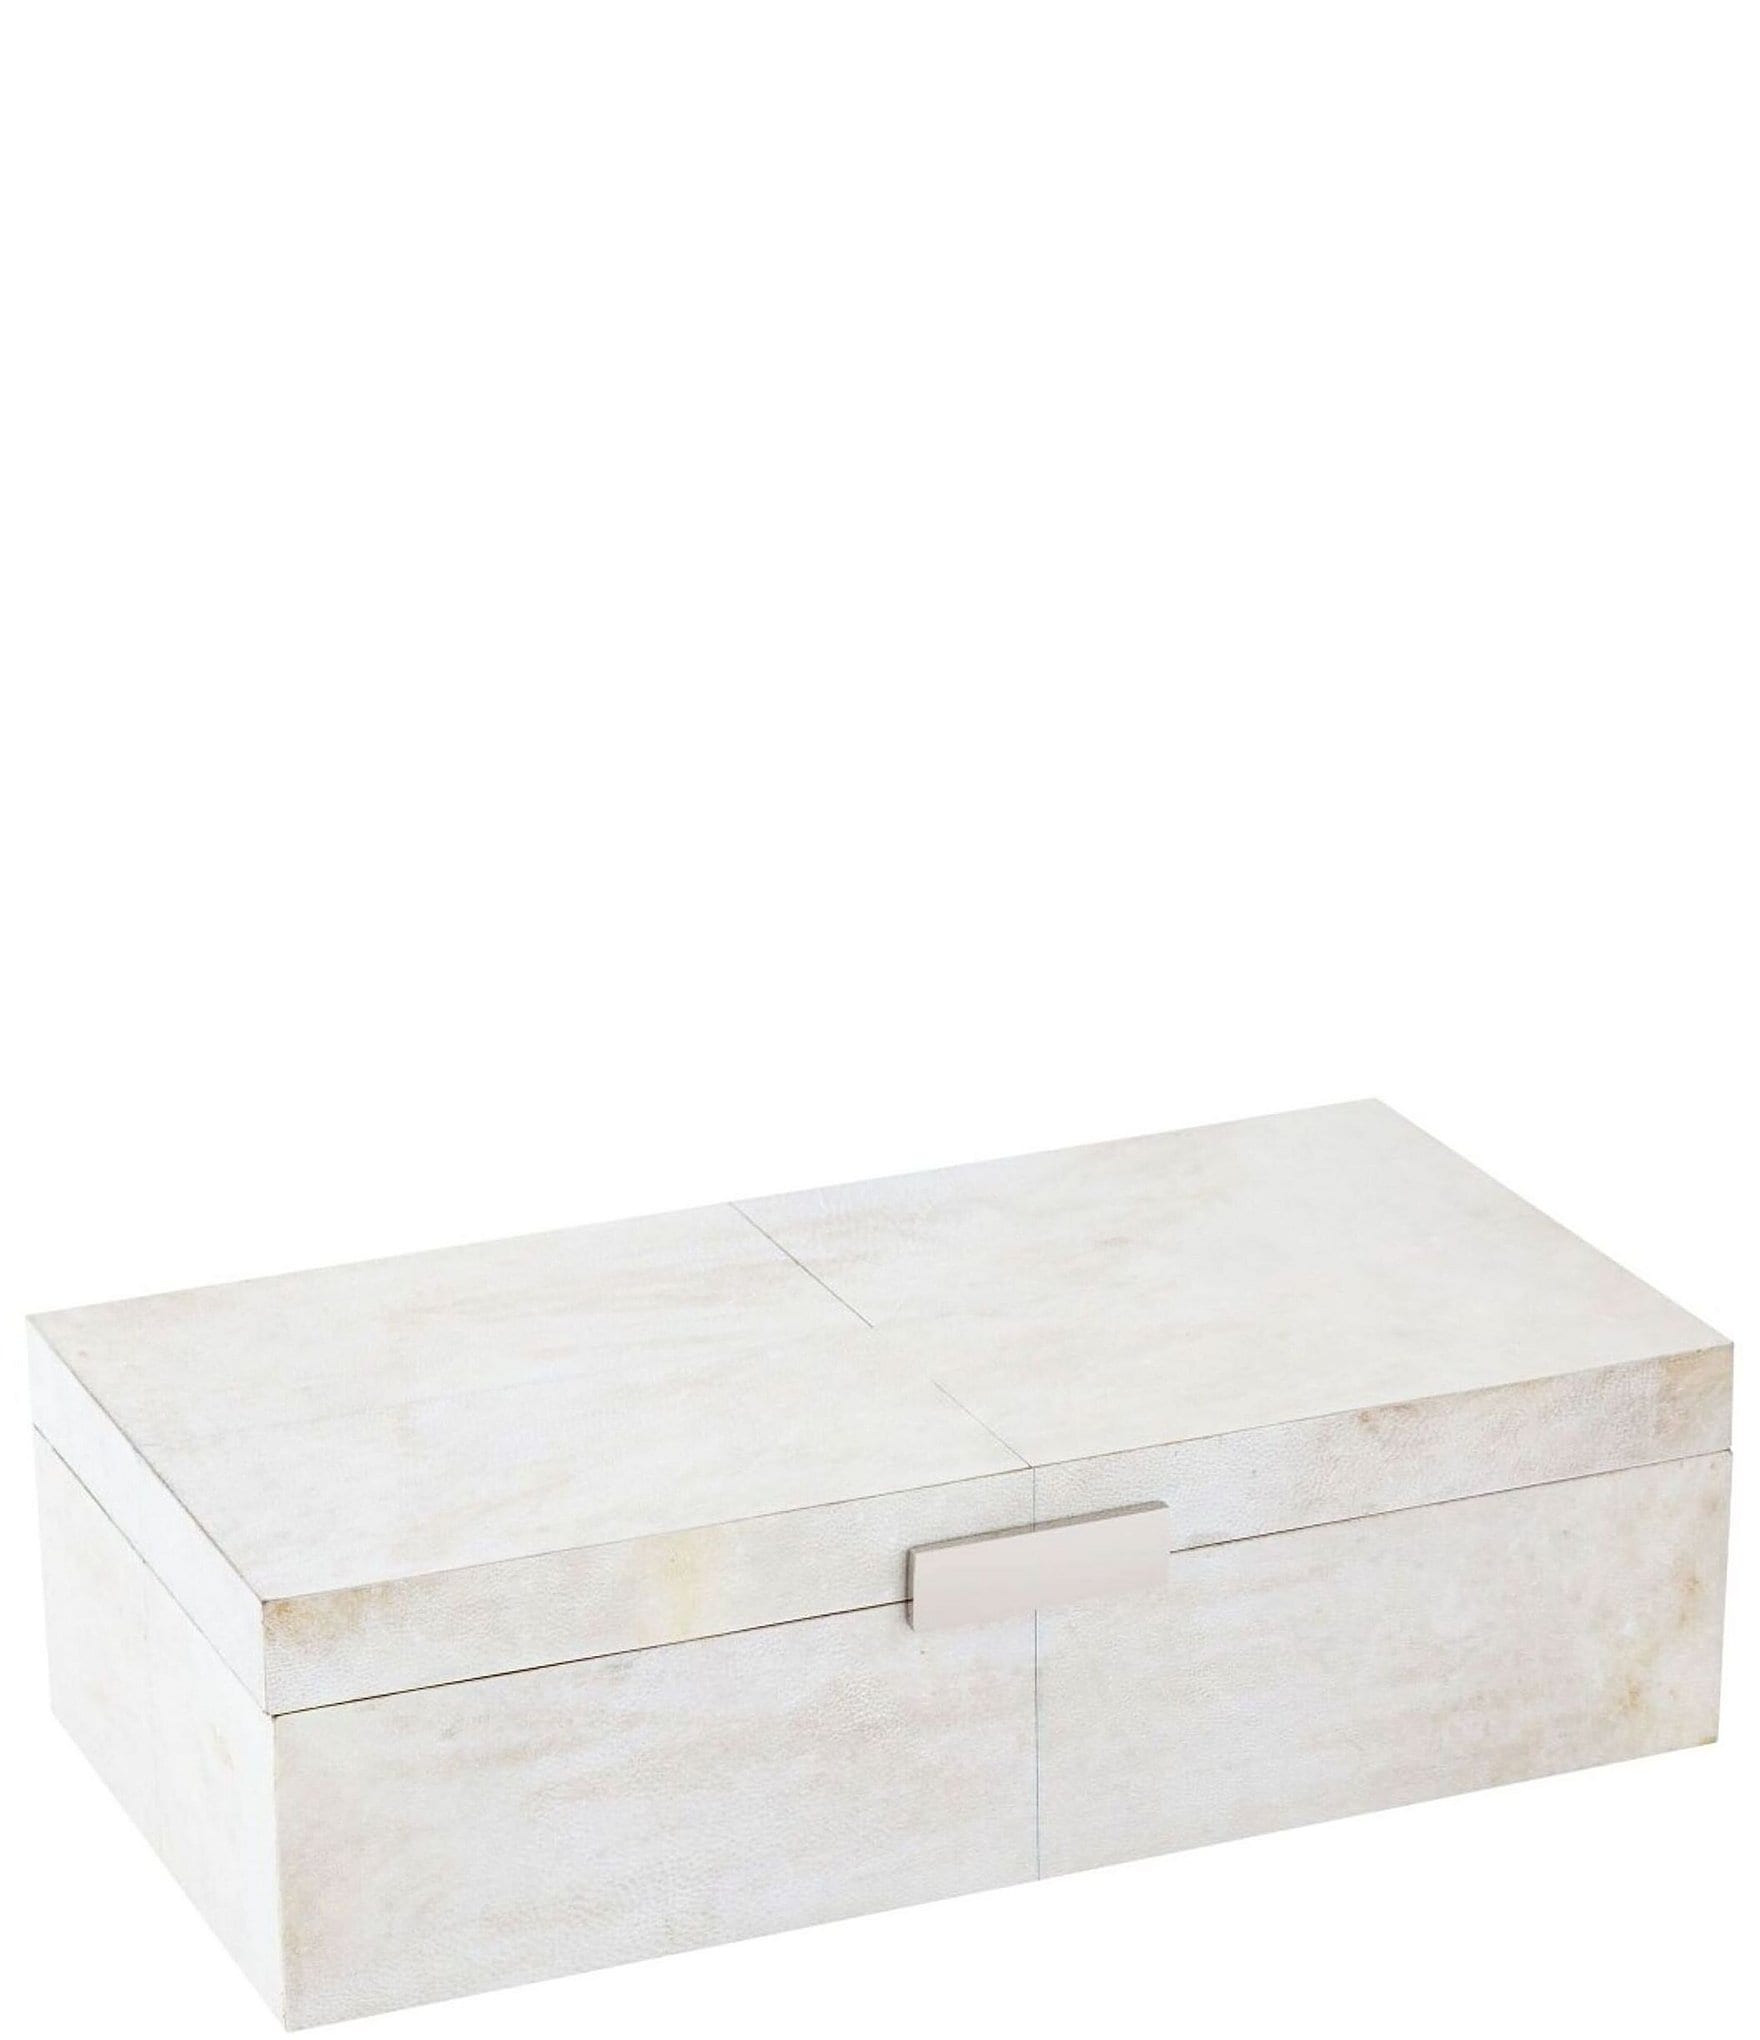 Danbook Medicine Storage Box for Home Decorative Storage Box with Lids for Home Decor Key Storage Box Large Rectangle, Size: 11, Beige